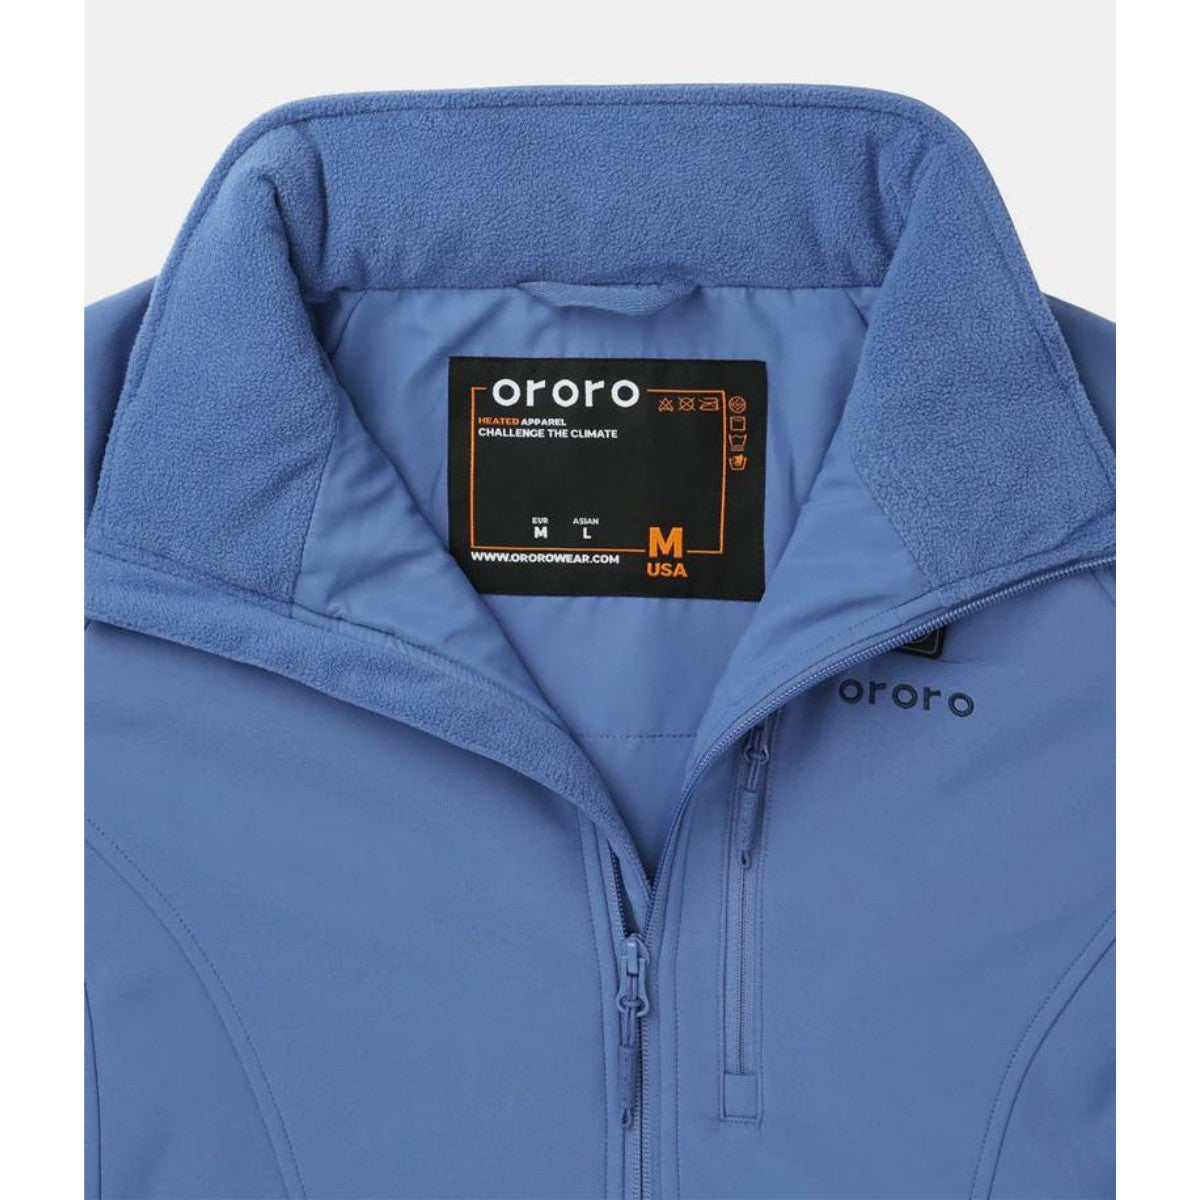 Ororo Women's Classic Heated Jacket - Haze Blue